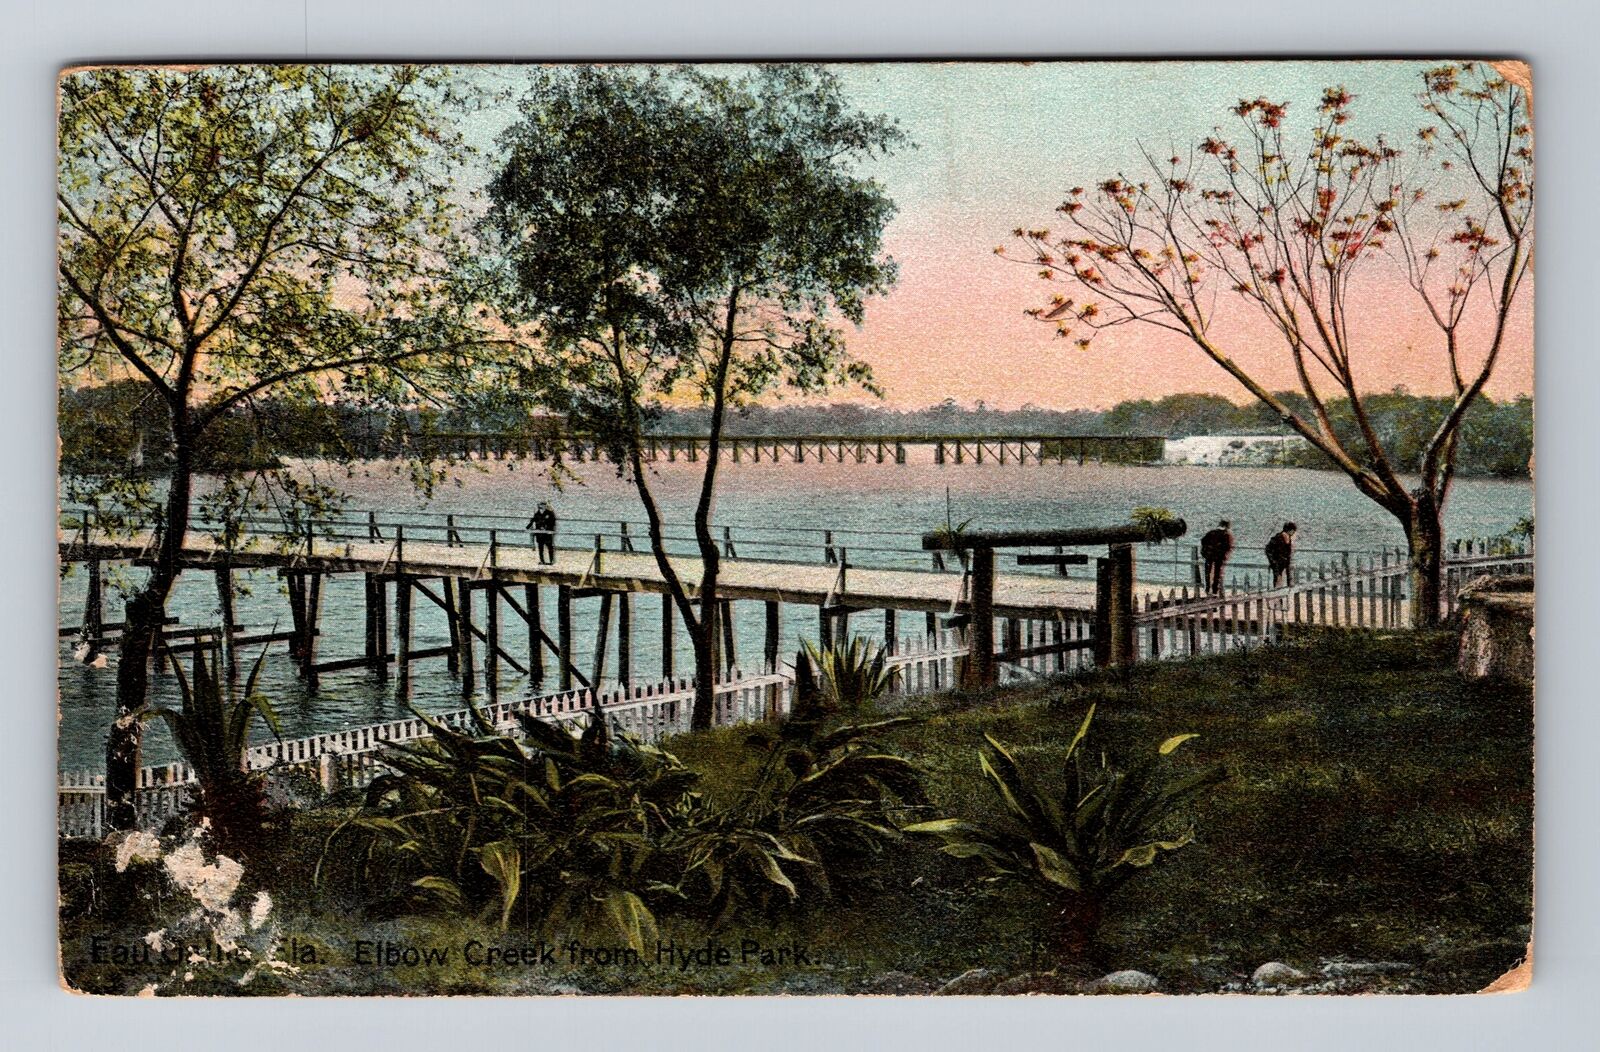 Eau Gala FL-Florida, Elbow Creek From Hyde Park, Antique, Vintage Postcard